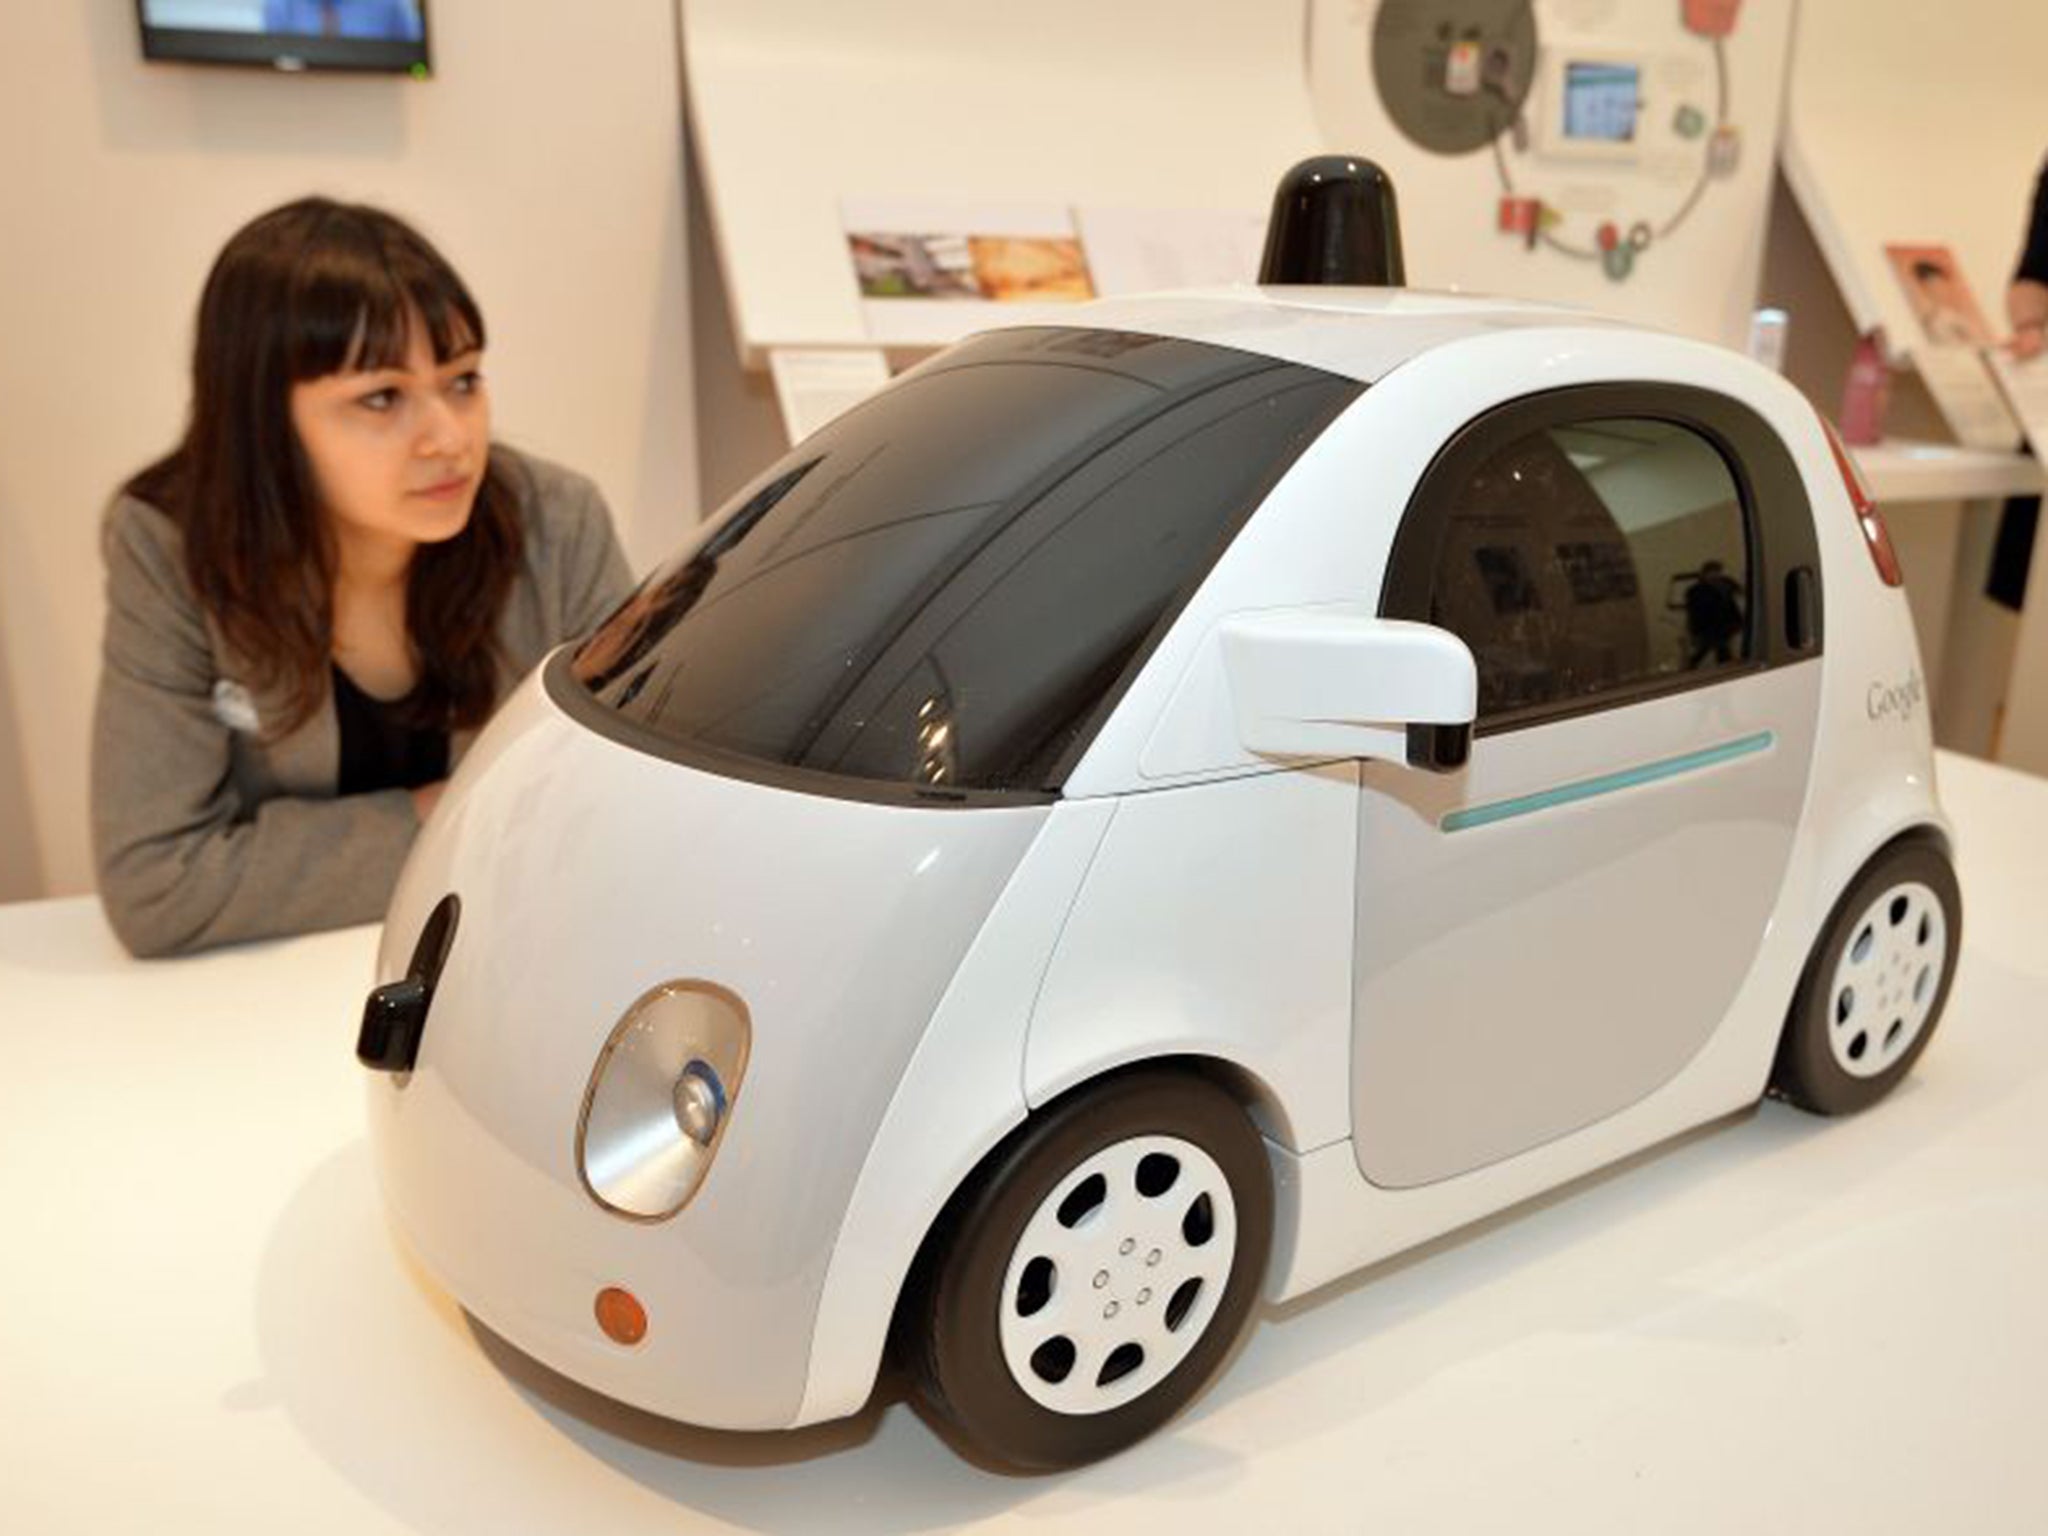 A model of Google’s driverless car